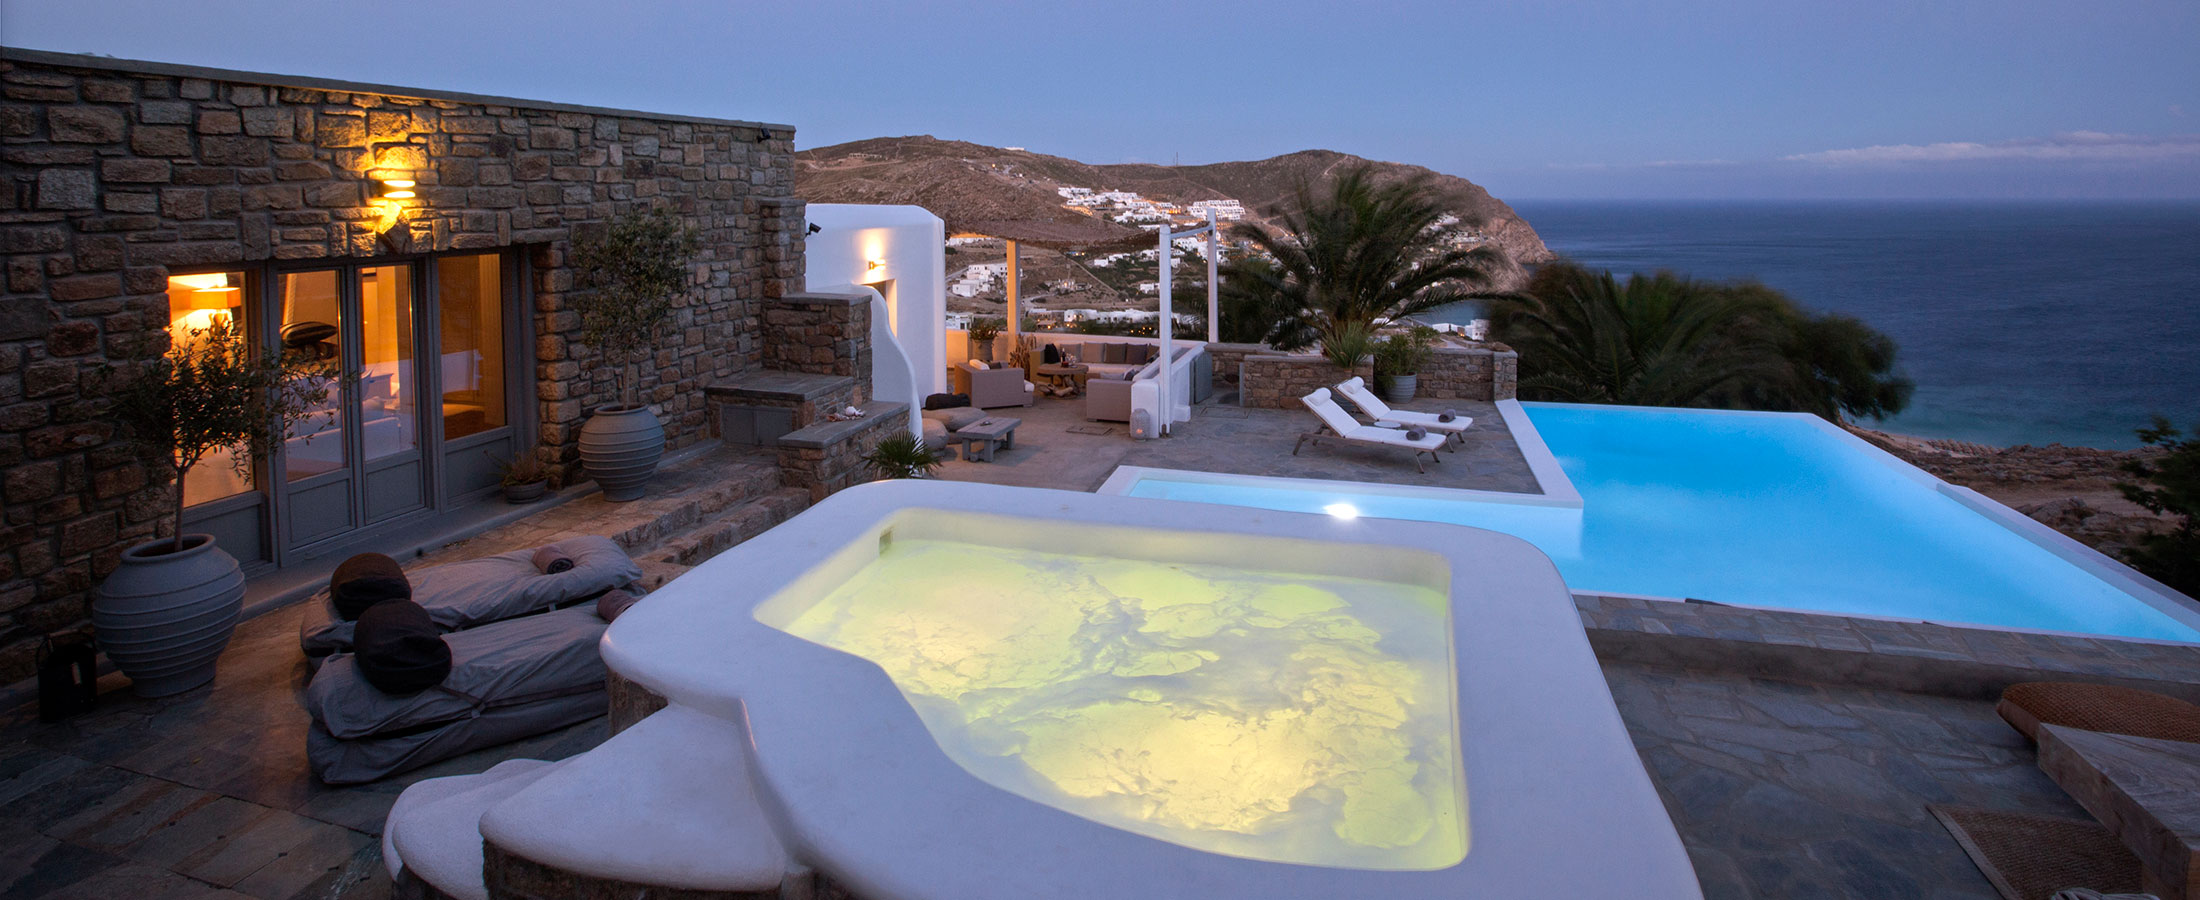 Our Luxury Villa Overlooking Elia Beach in Mykonos